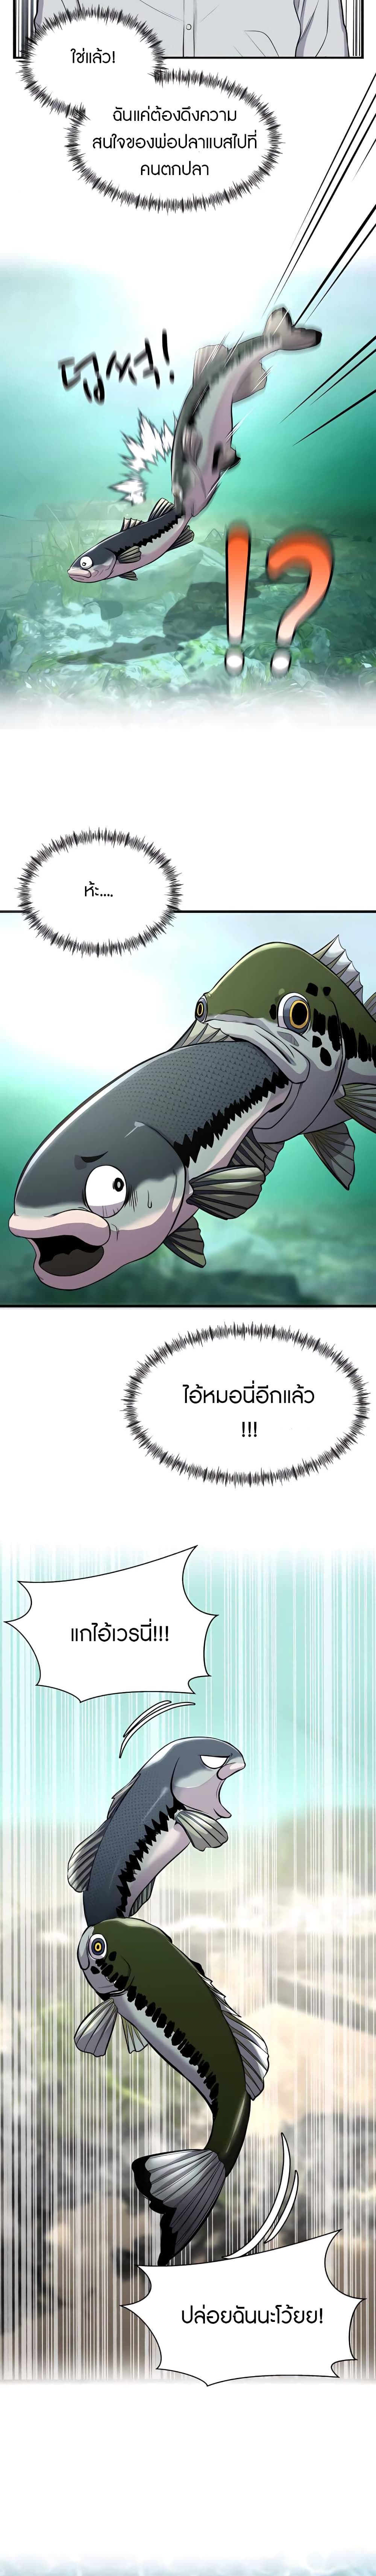 Fish4 35